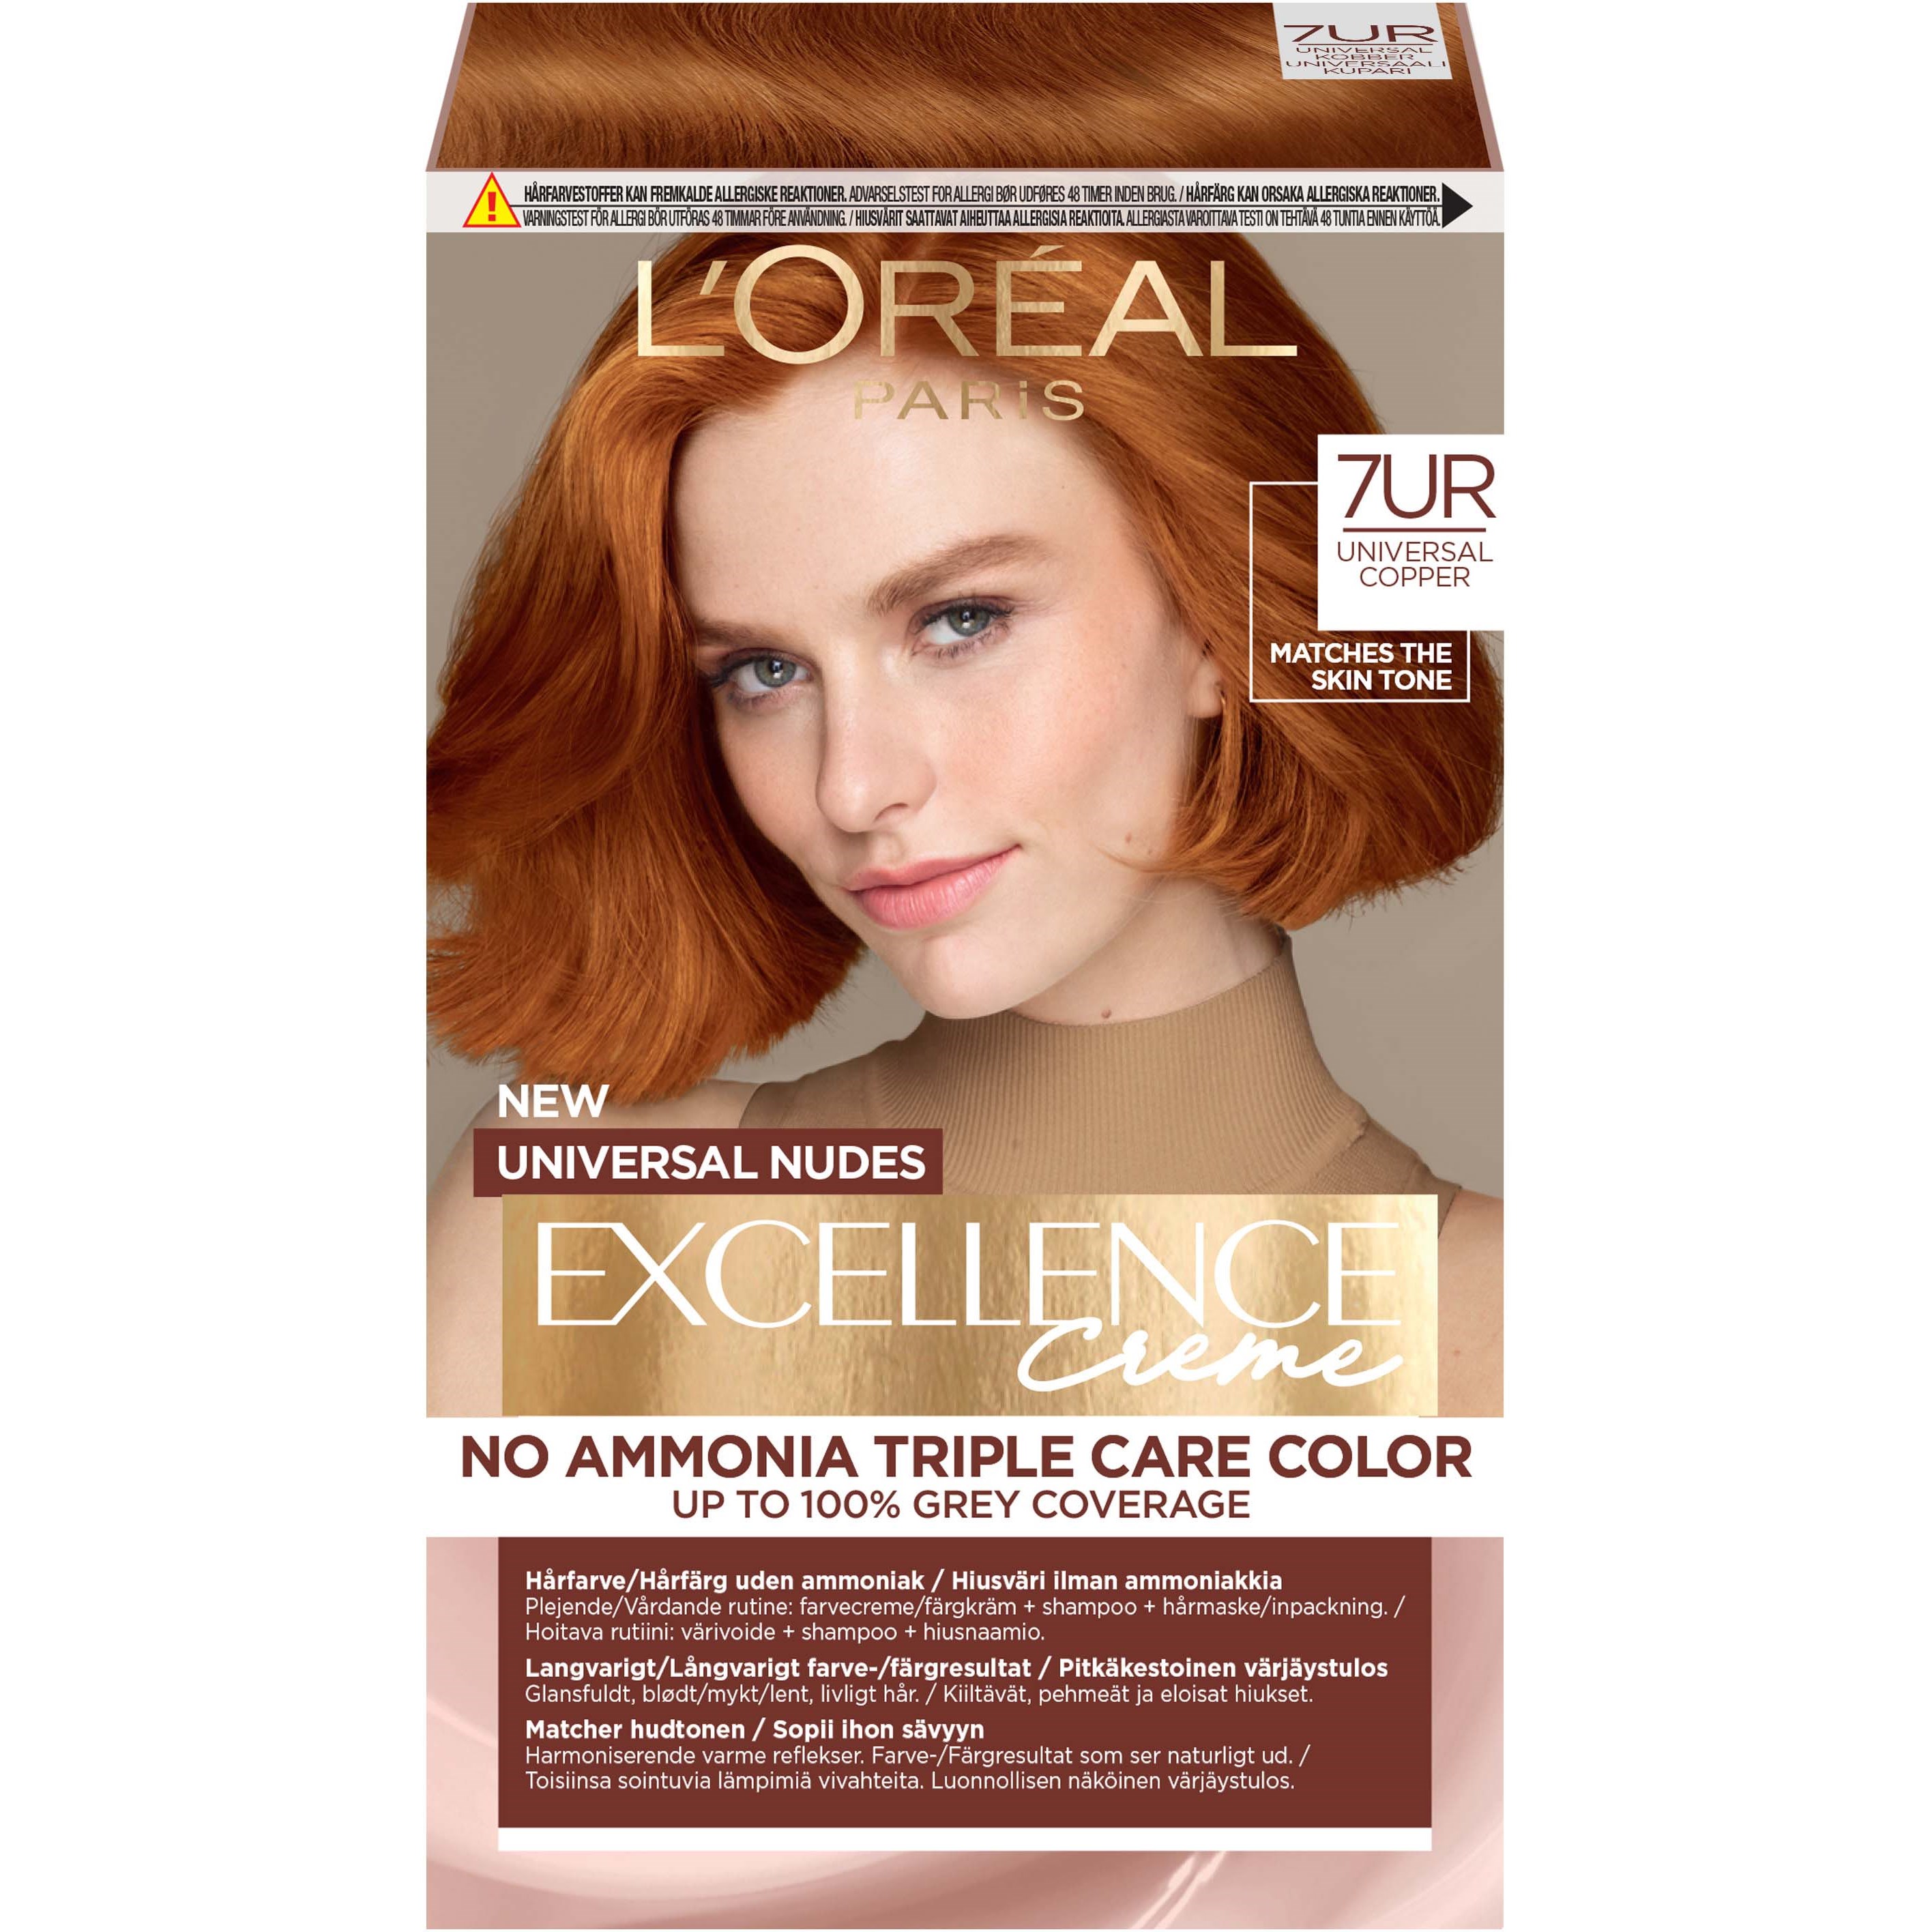 Bilde av Loreal Paris Excellence Creme Universal Nudes Hair Color 7ur Universal